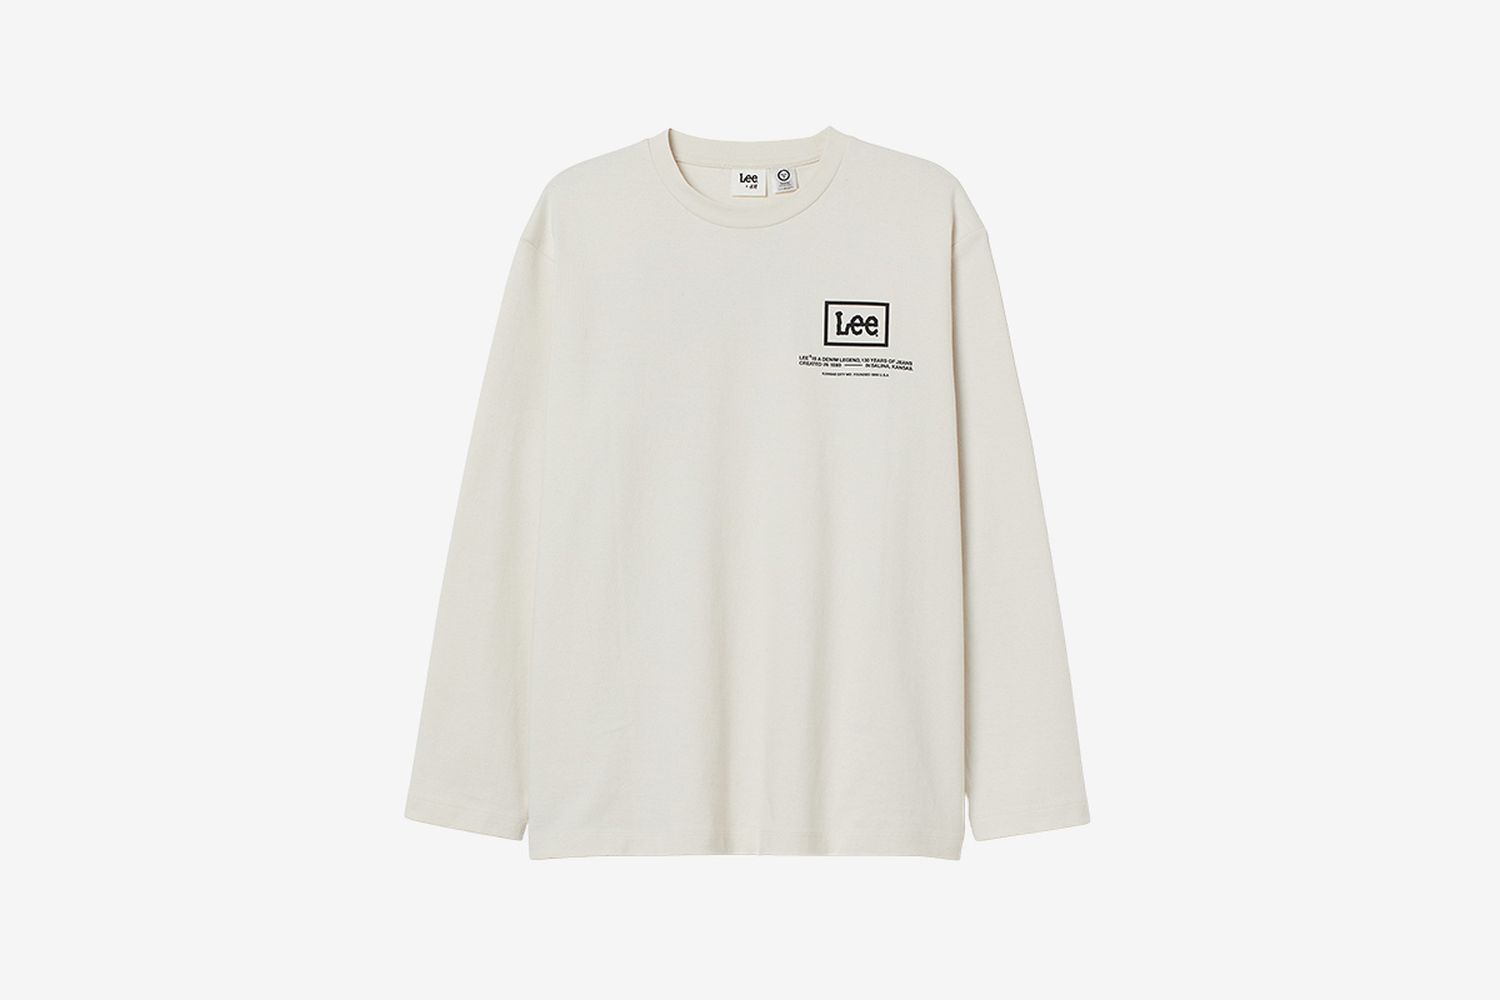 Lee x H&M Long-Sleeve Shirt